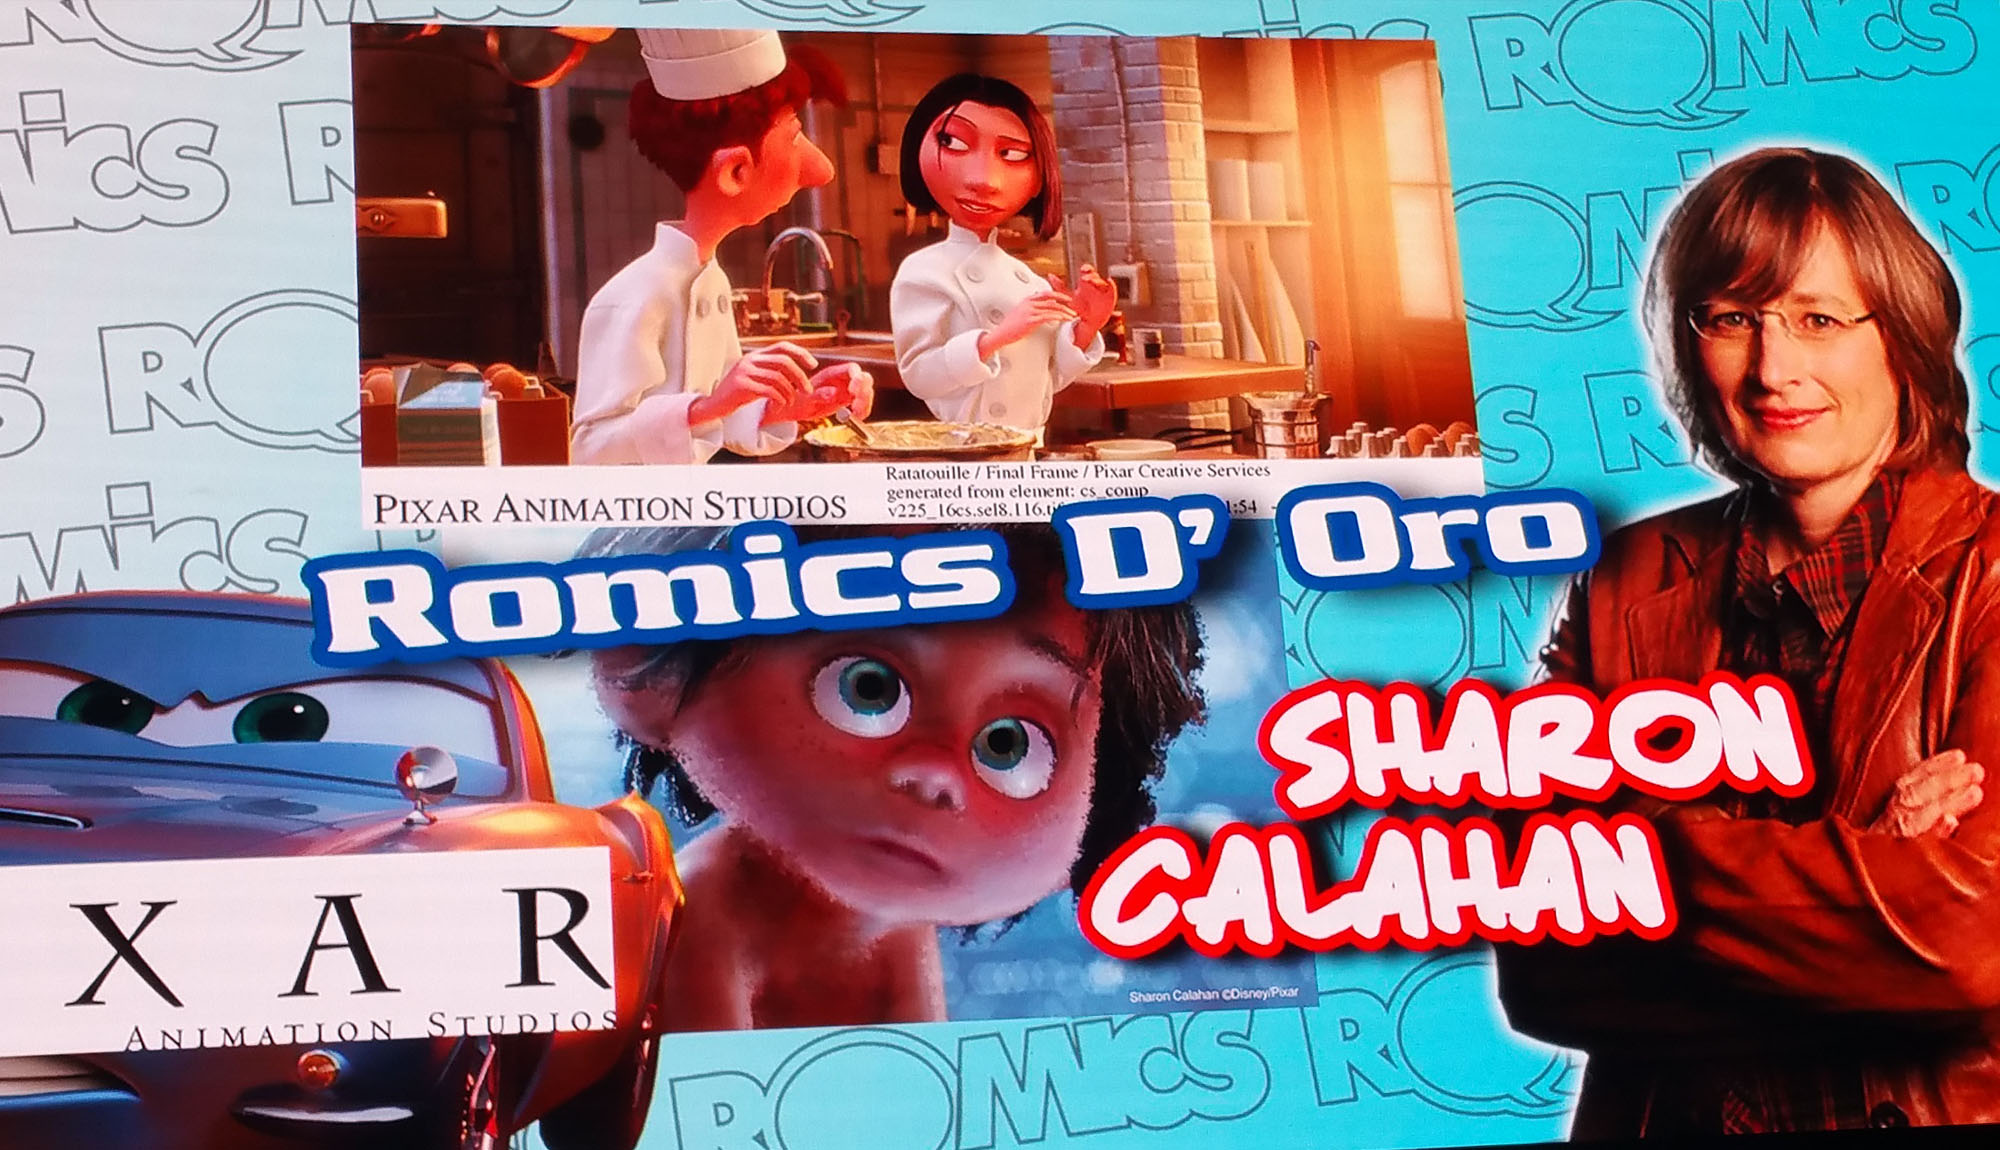 Sharon Calahan, la celebre direttrice della fotografia Disney Pixar ospite al Romics 2017, si racconta in conferenza stampa